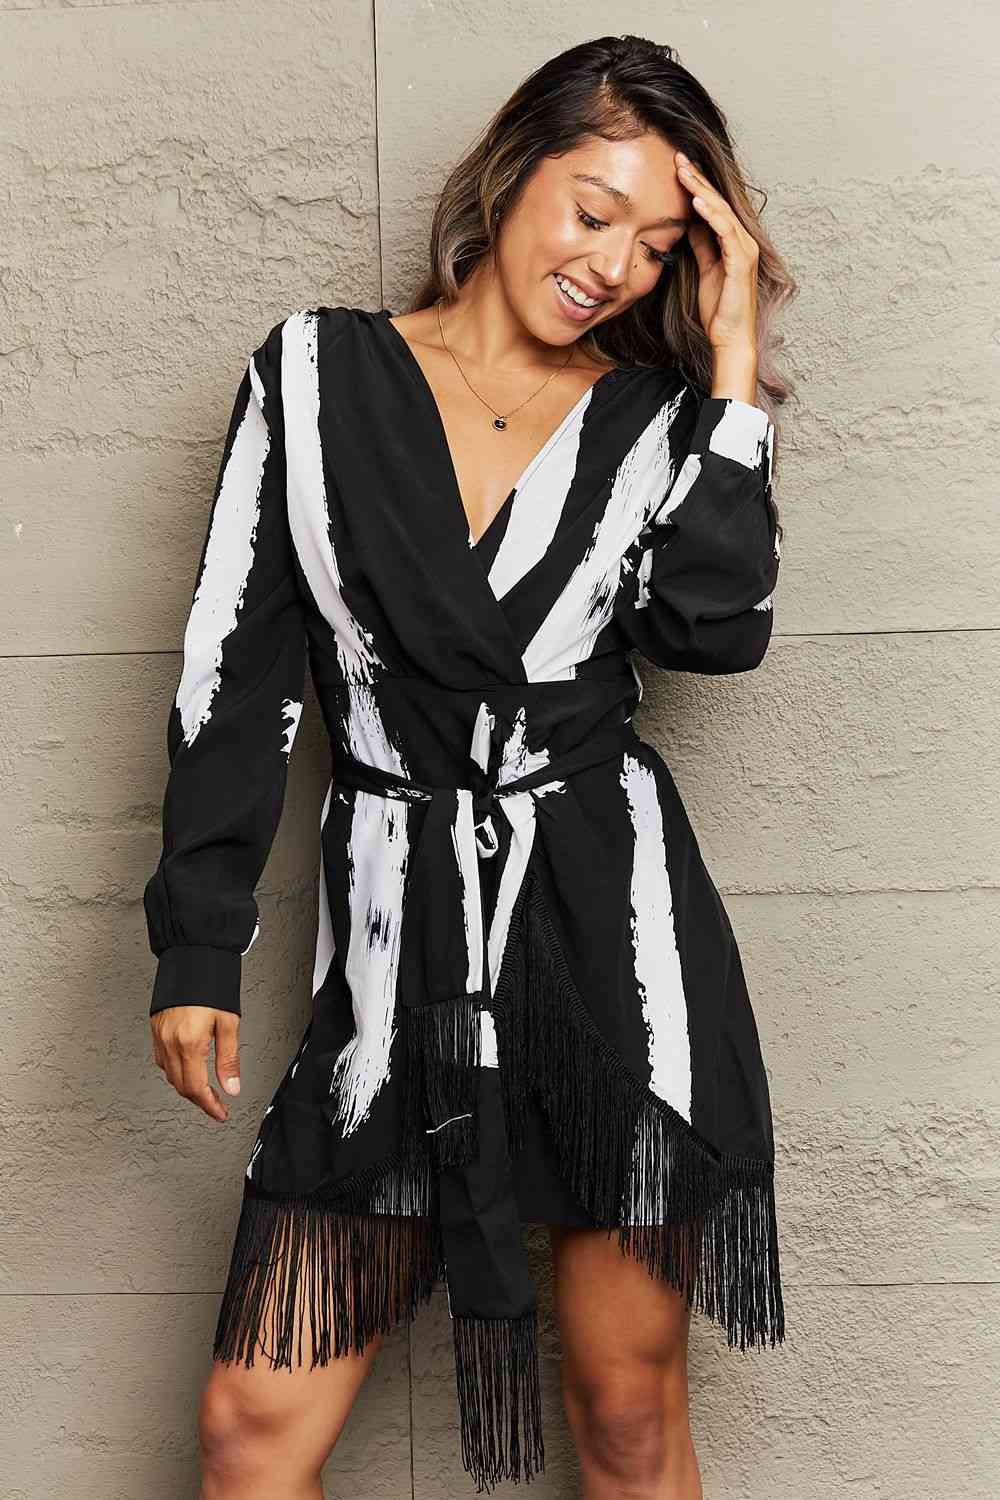 TEEK - Black and White Fringe Detail Dress DRESS TEEK Trend   